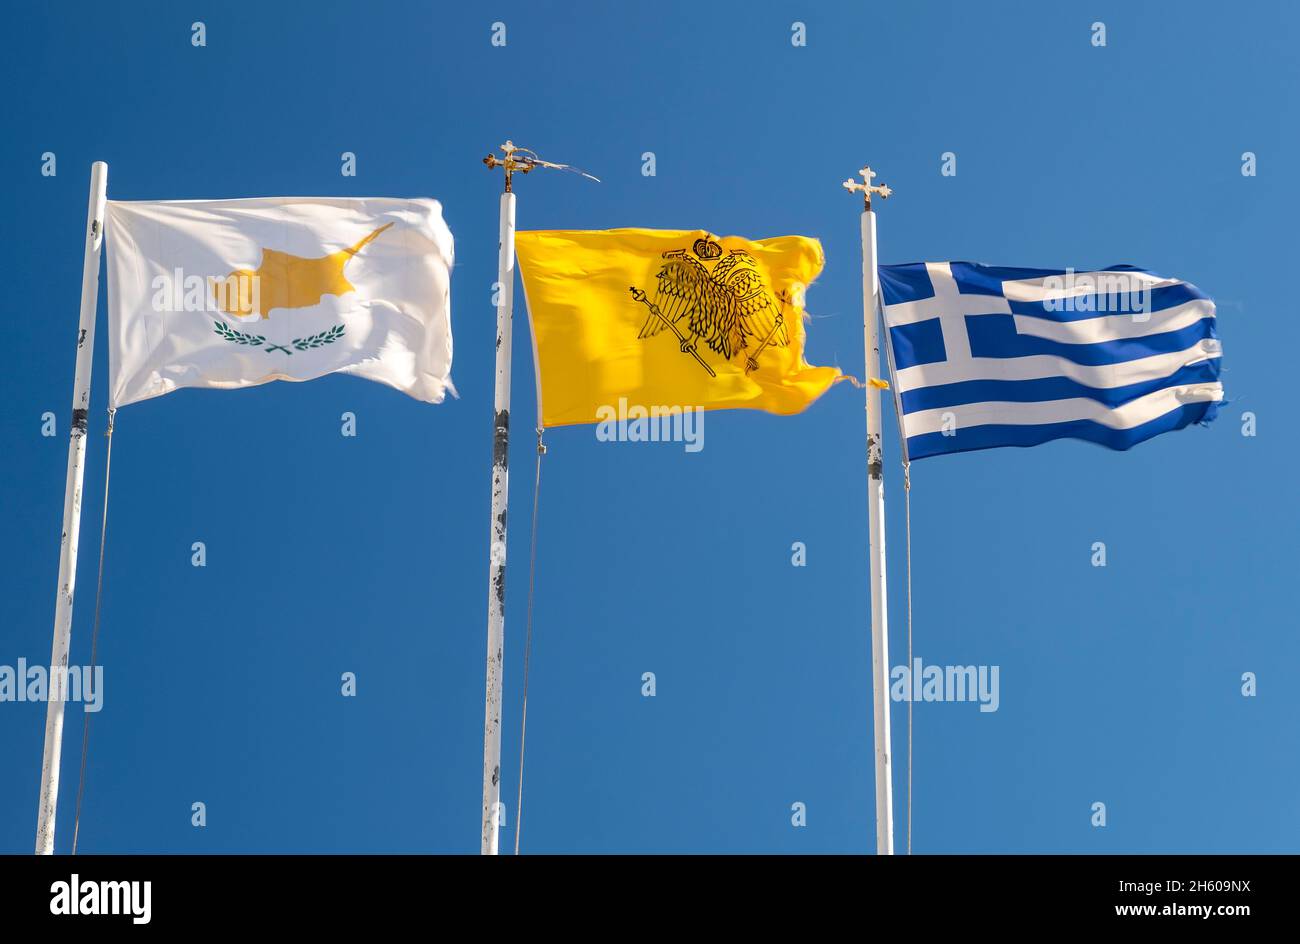 Three flags, flag of Cyprus, church of Cyprus flag and Greek flag flying over the Agios Nikolaos church, Pernera, Protaras, Cyprus. Stock Photo